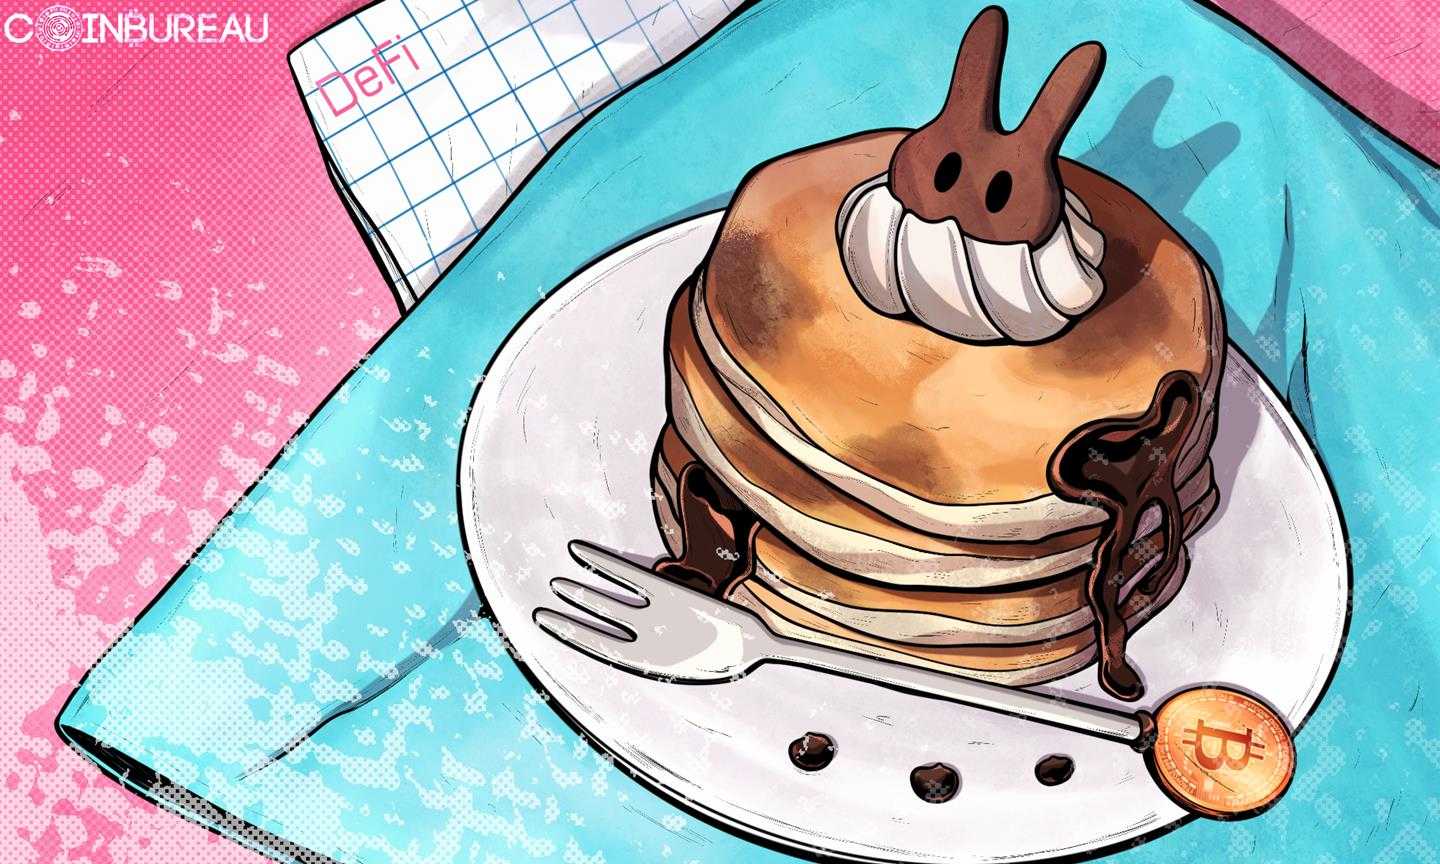 How to Use Pancake Swap